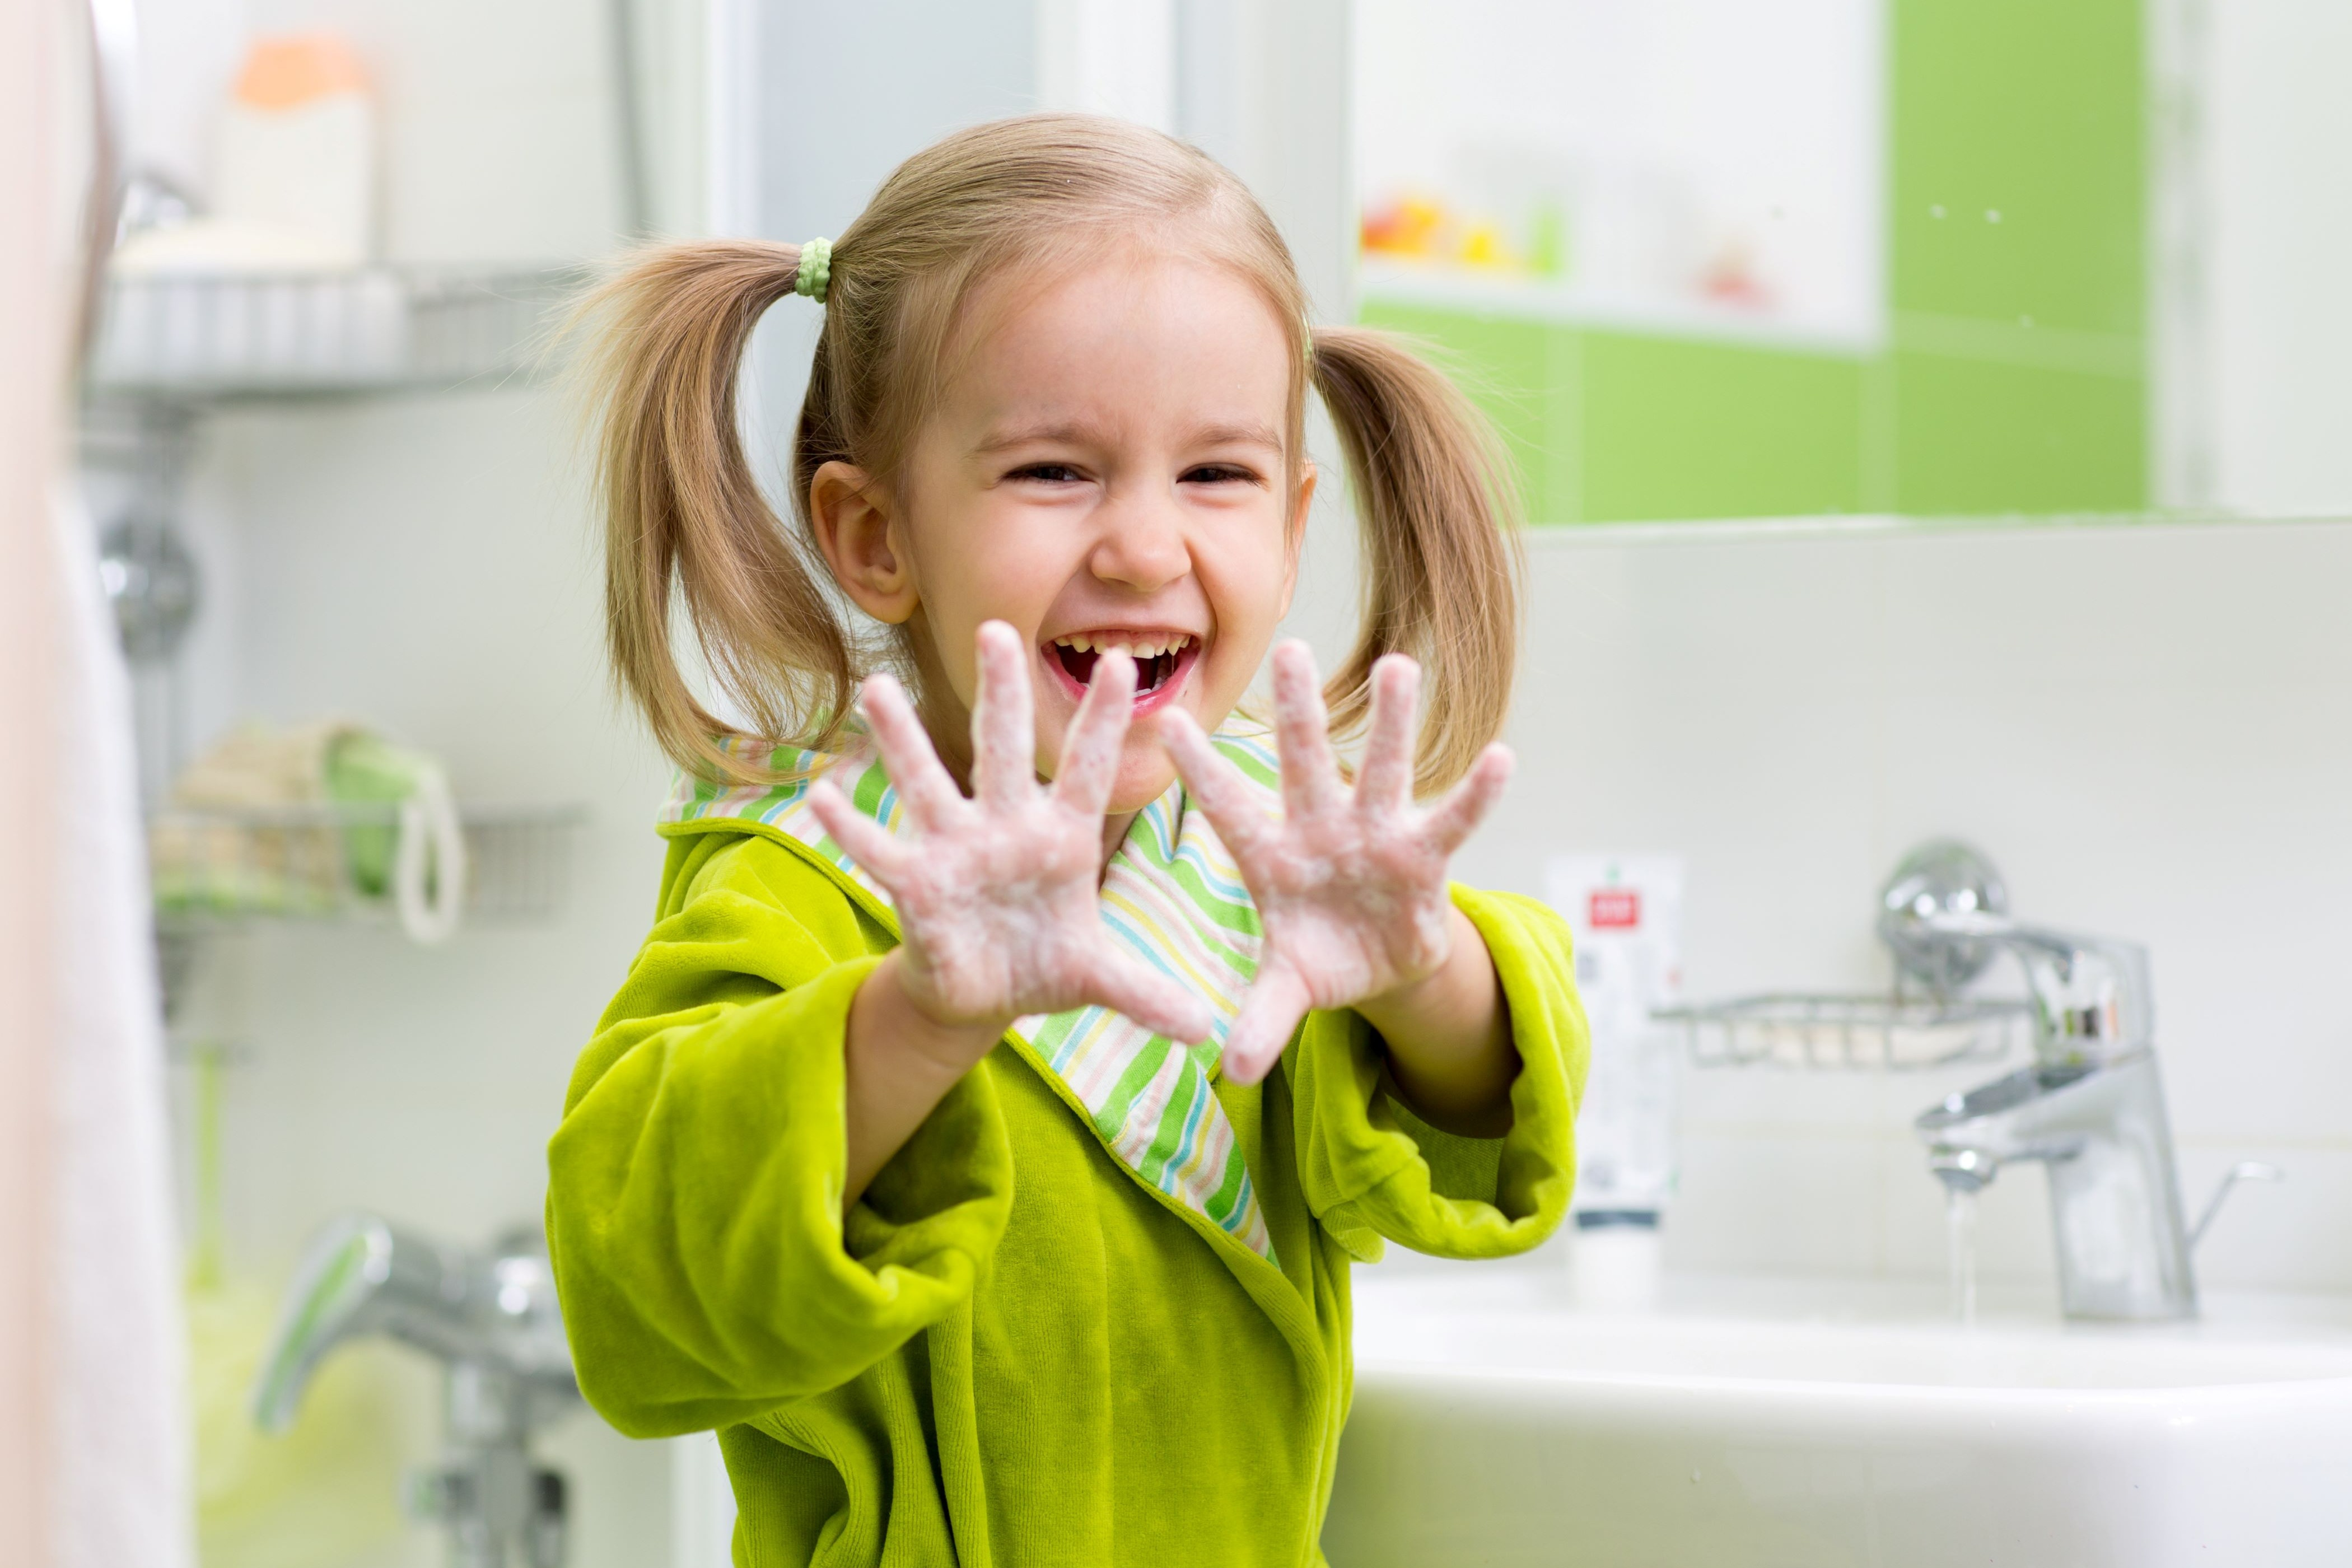 Helping children form hygiene habits for life